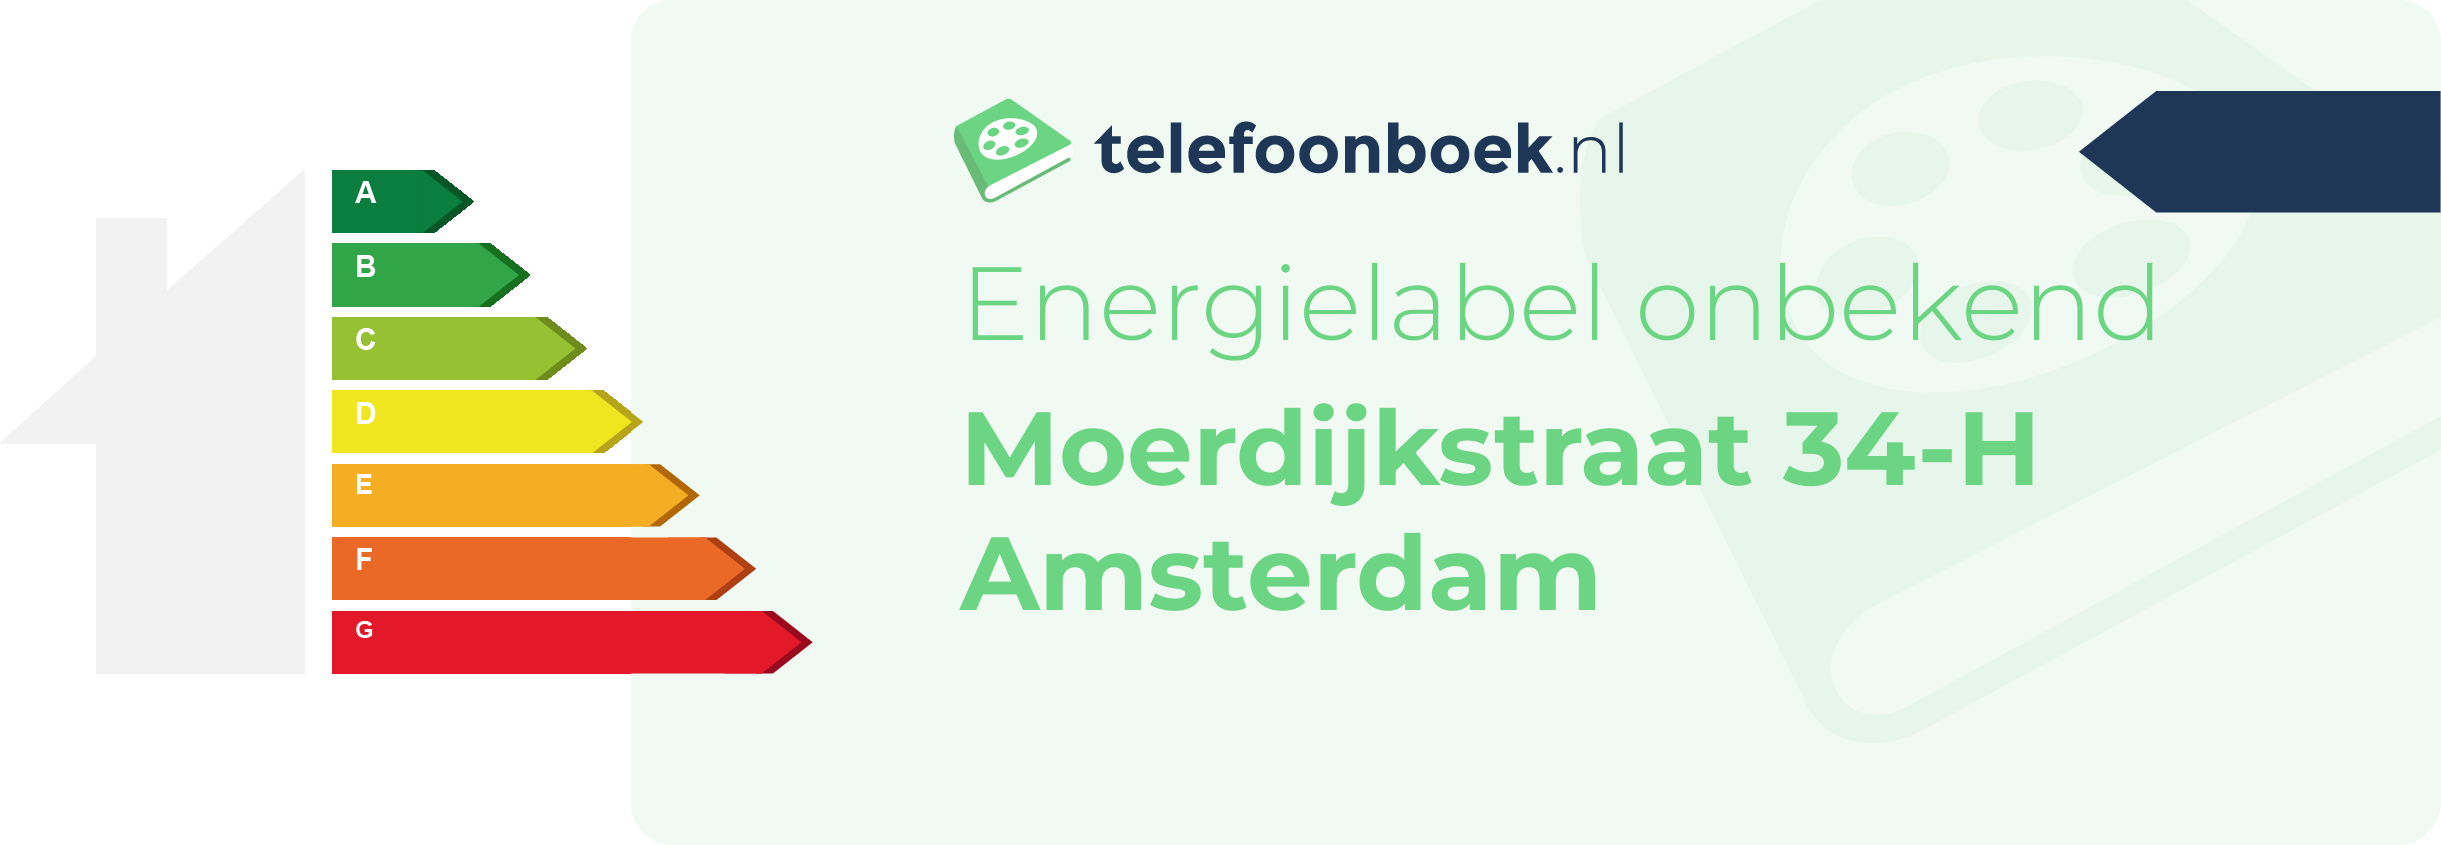 Energielabel Moerdijkstraat 34-H Amsterdam